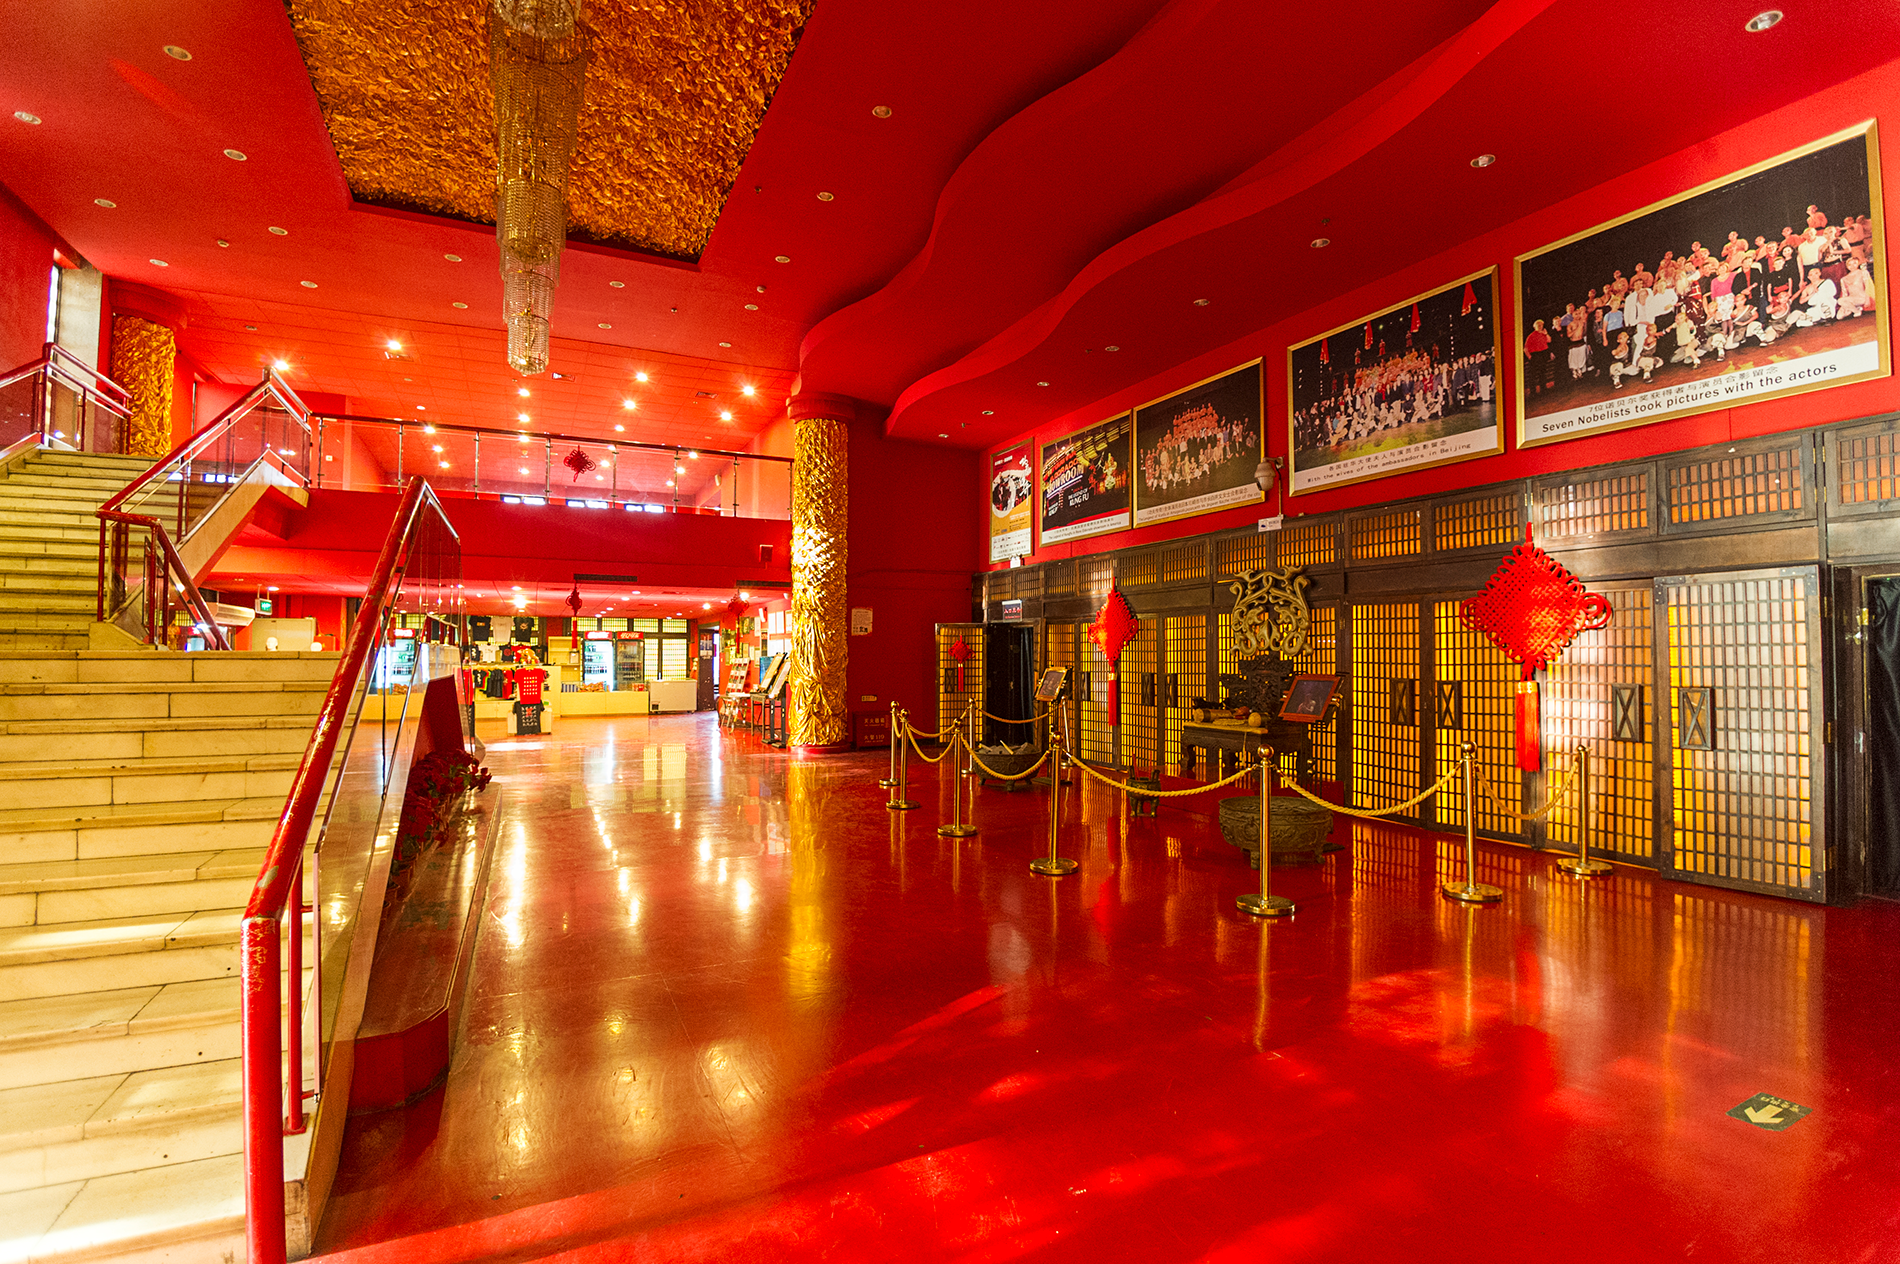 Red Theatre